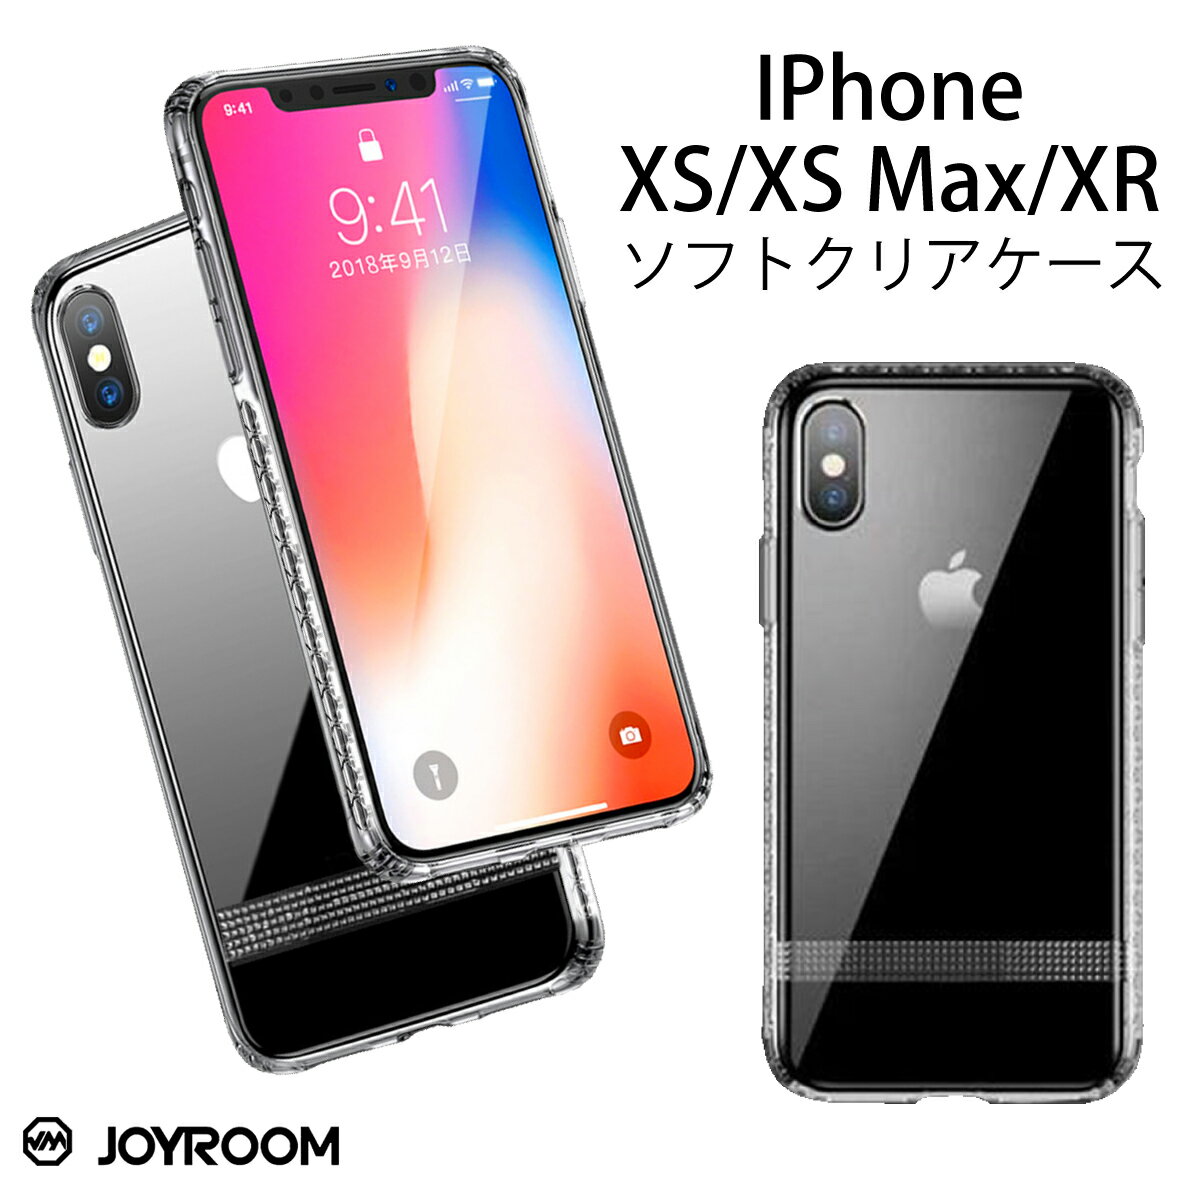 iPhoneXSケース iPhoneXS Max iPhoneXR ケース iPhoneXケース iPhone XS X アイフォンXS iPhoneXS iphoneX アイフォンX ケース スマホケース TPU ケース カバー クリアケース アイフォンx ソフトケース アイフォンテン 衝撃 クリア jr-bp488